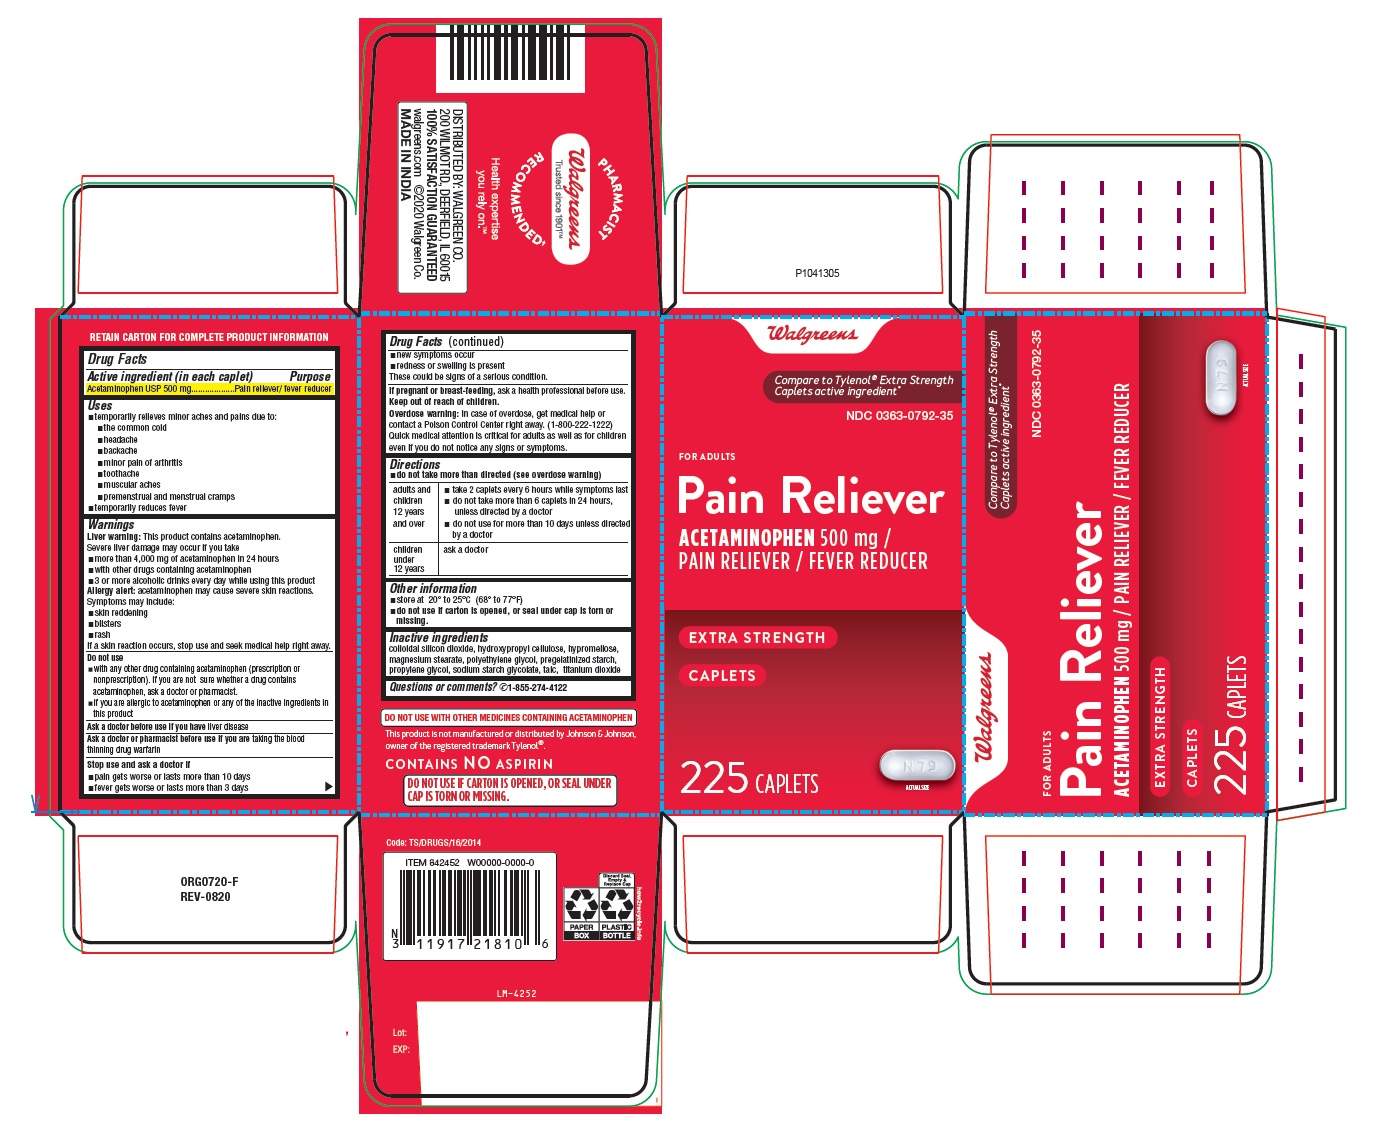 PACKAGE LABEL-PRINCIPAL DISPLAY PANEL 500 mg (225 Caplets Carton Label)